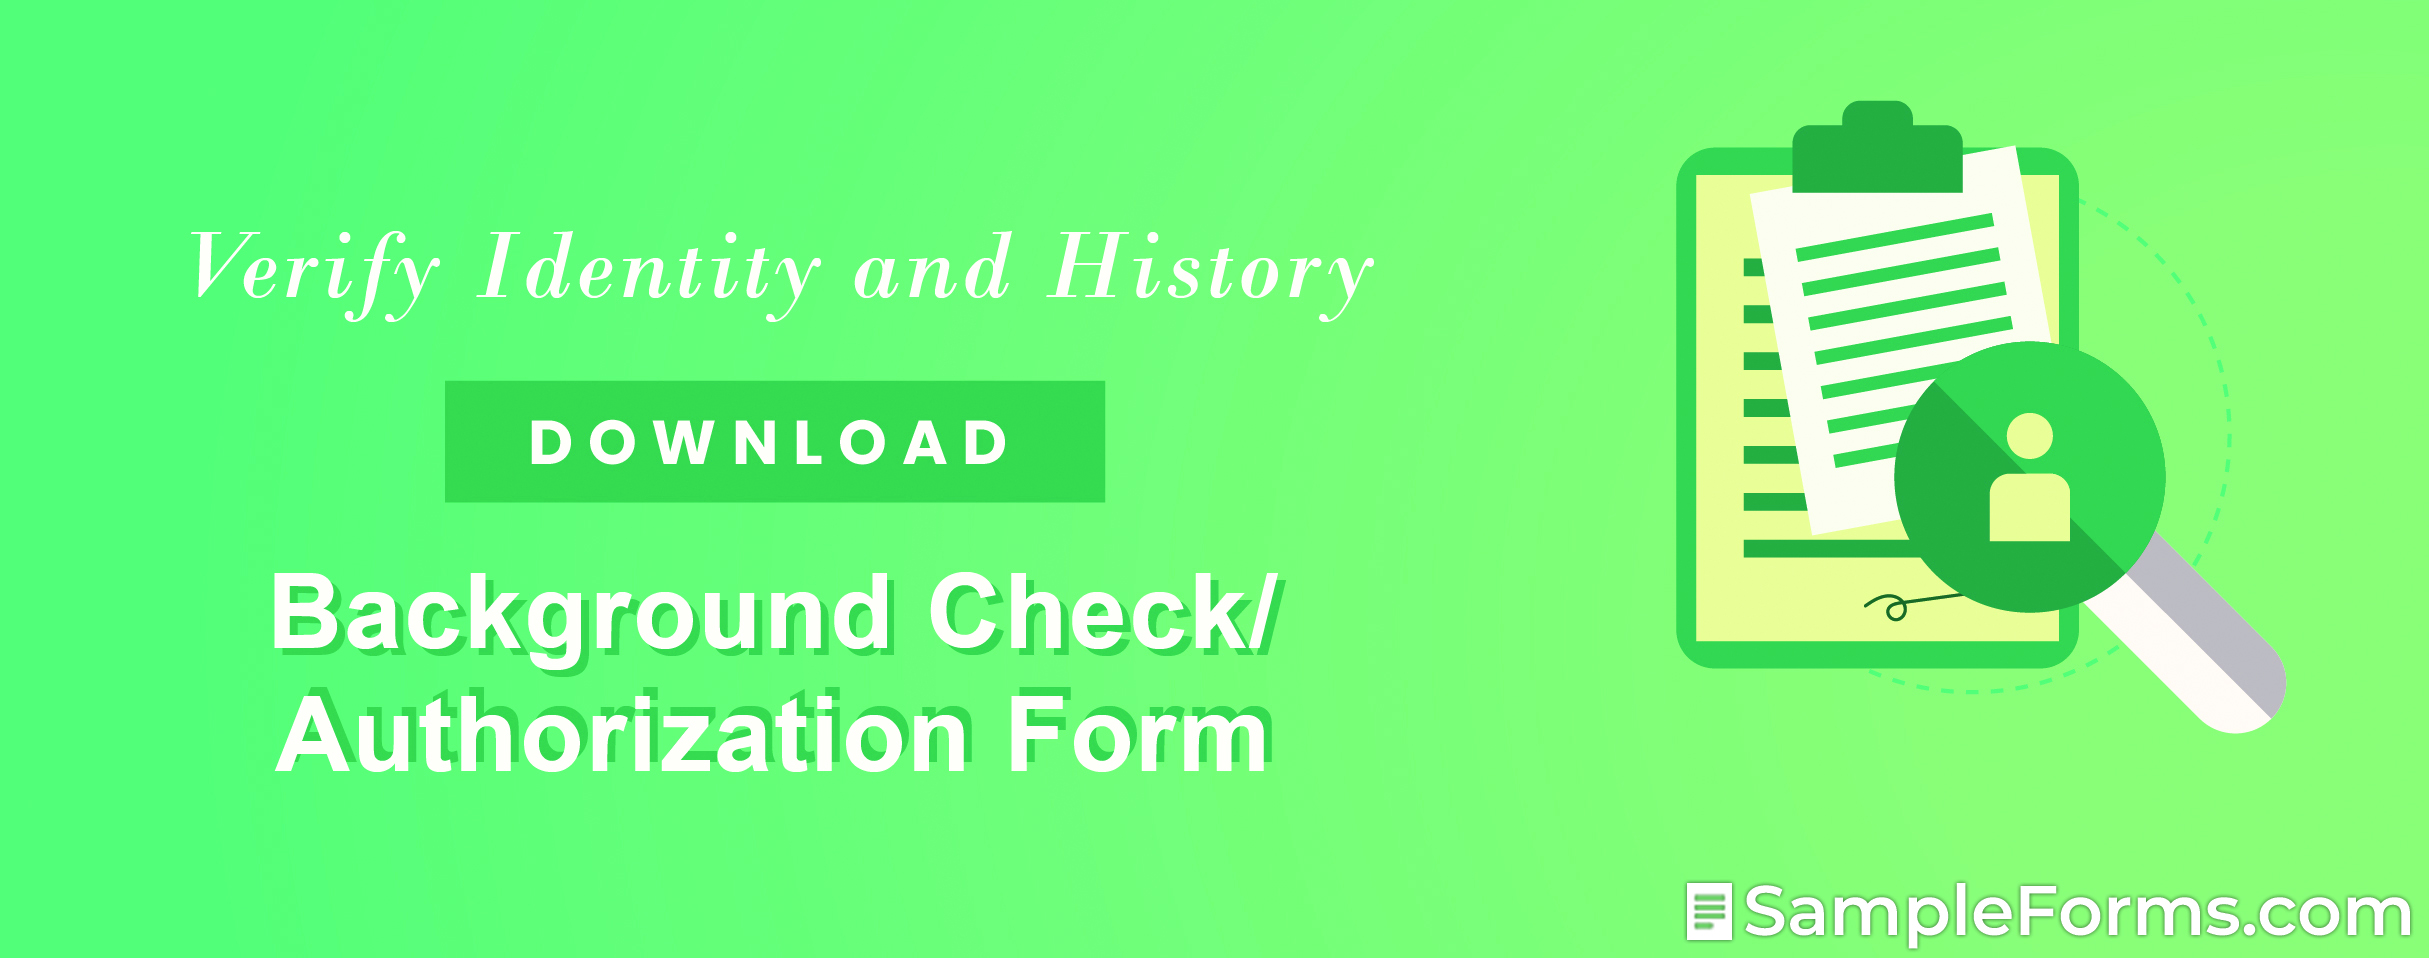 Background CheckAuthorization Form